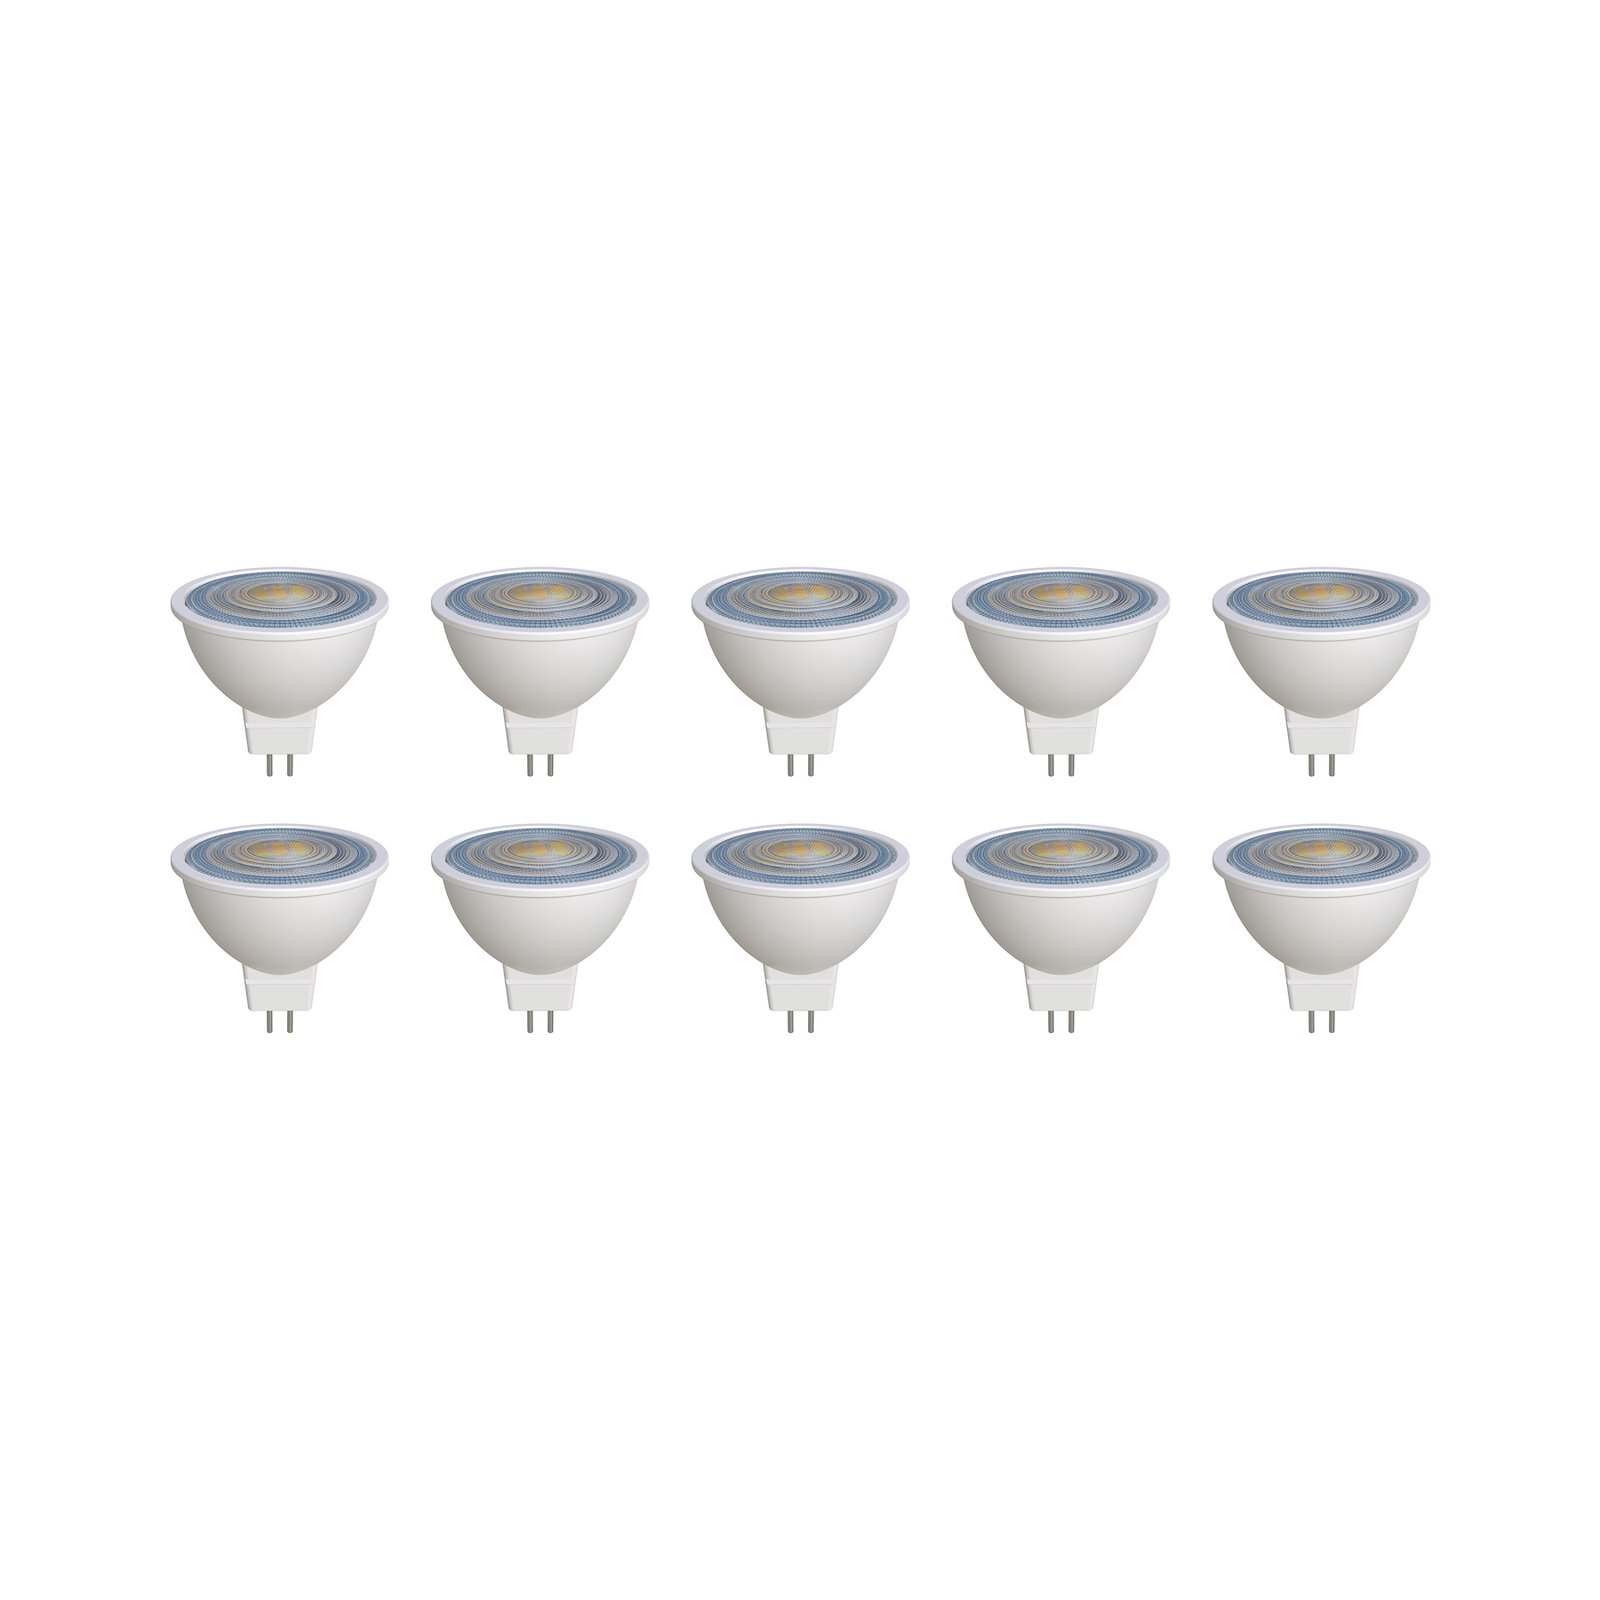 Prios LED refletor GU5.3 7.5W 621lm 36° branco 840 conjunto de 10